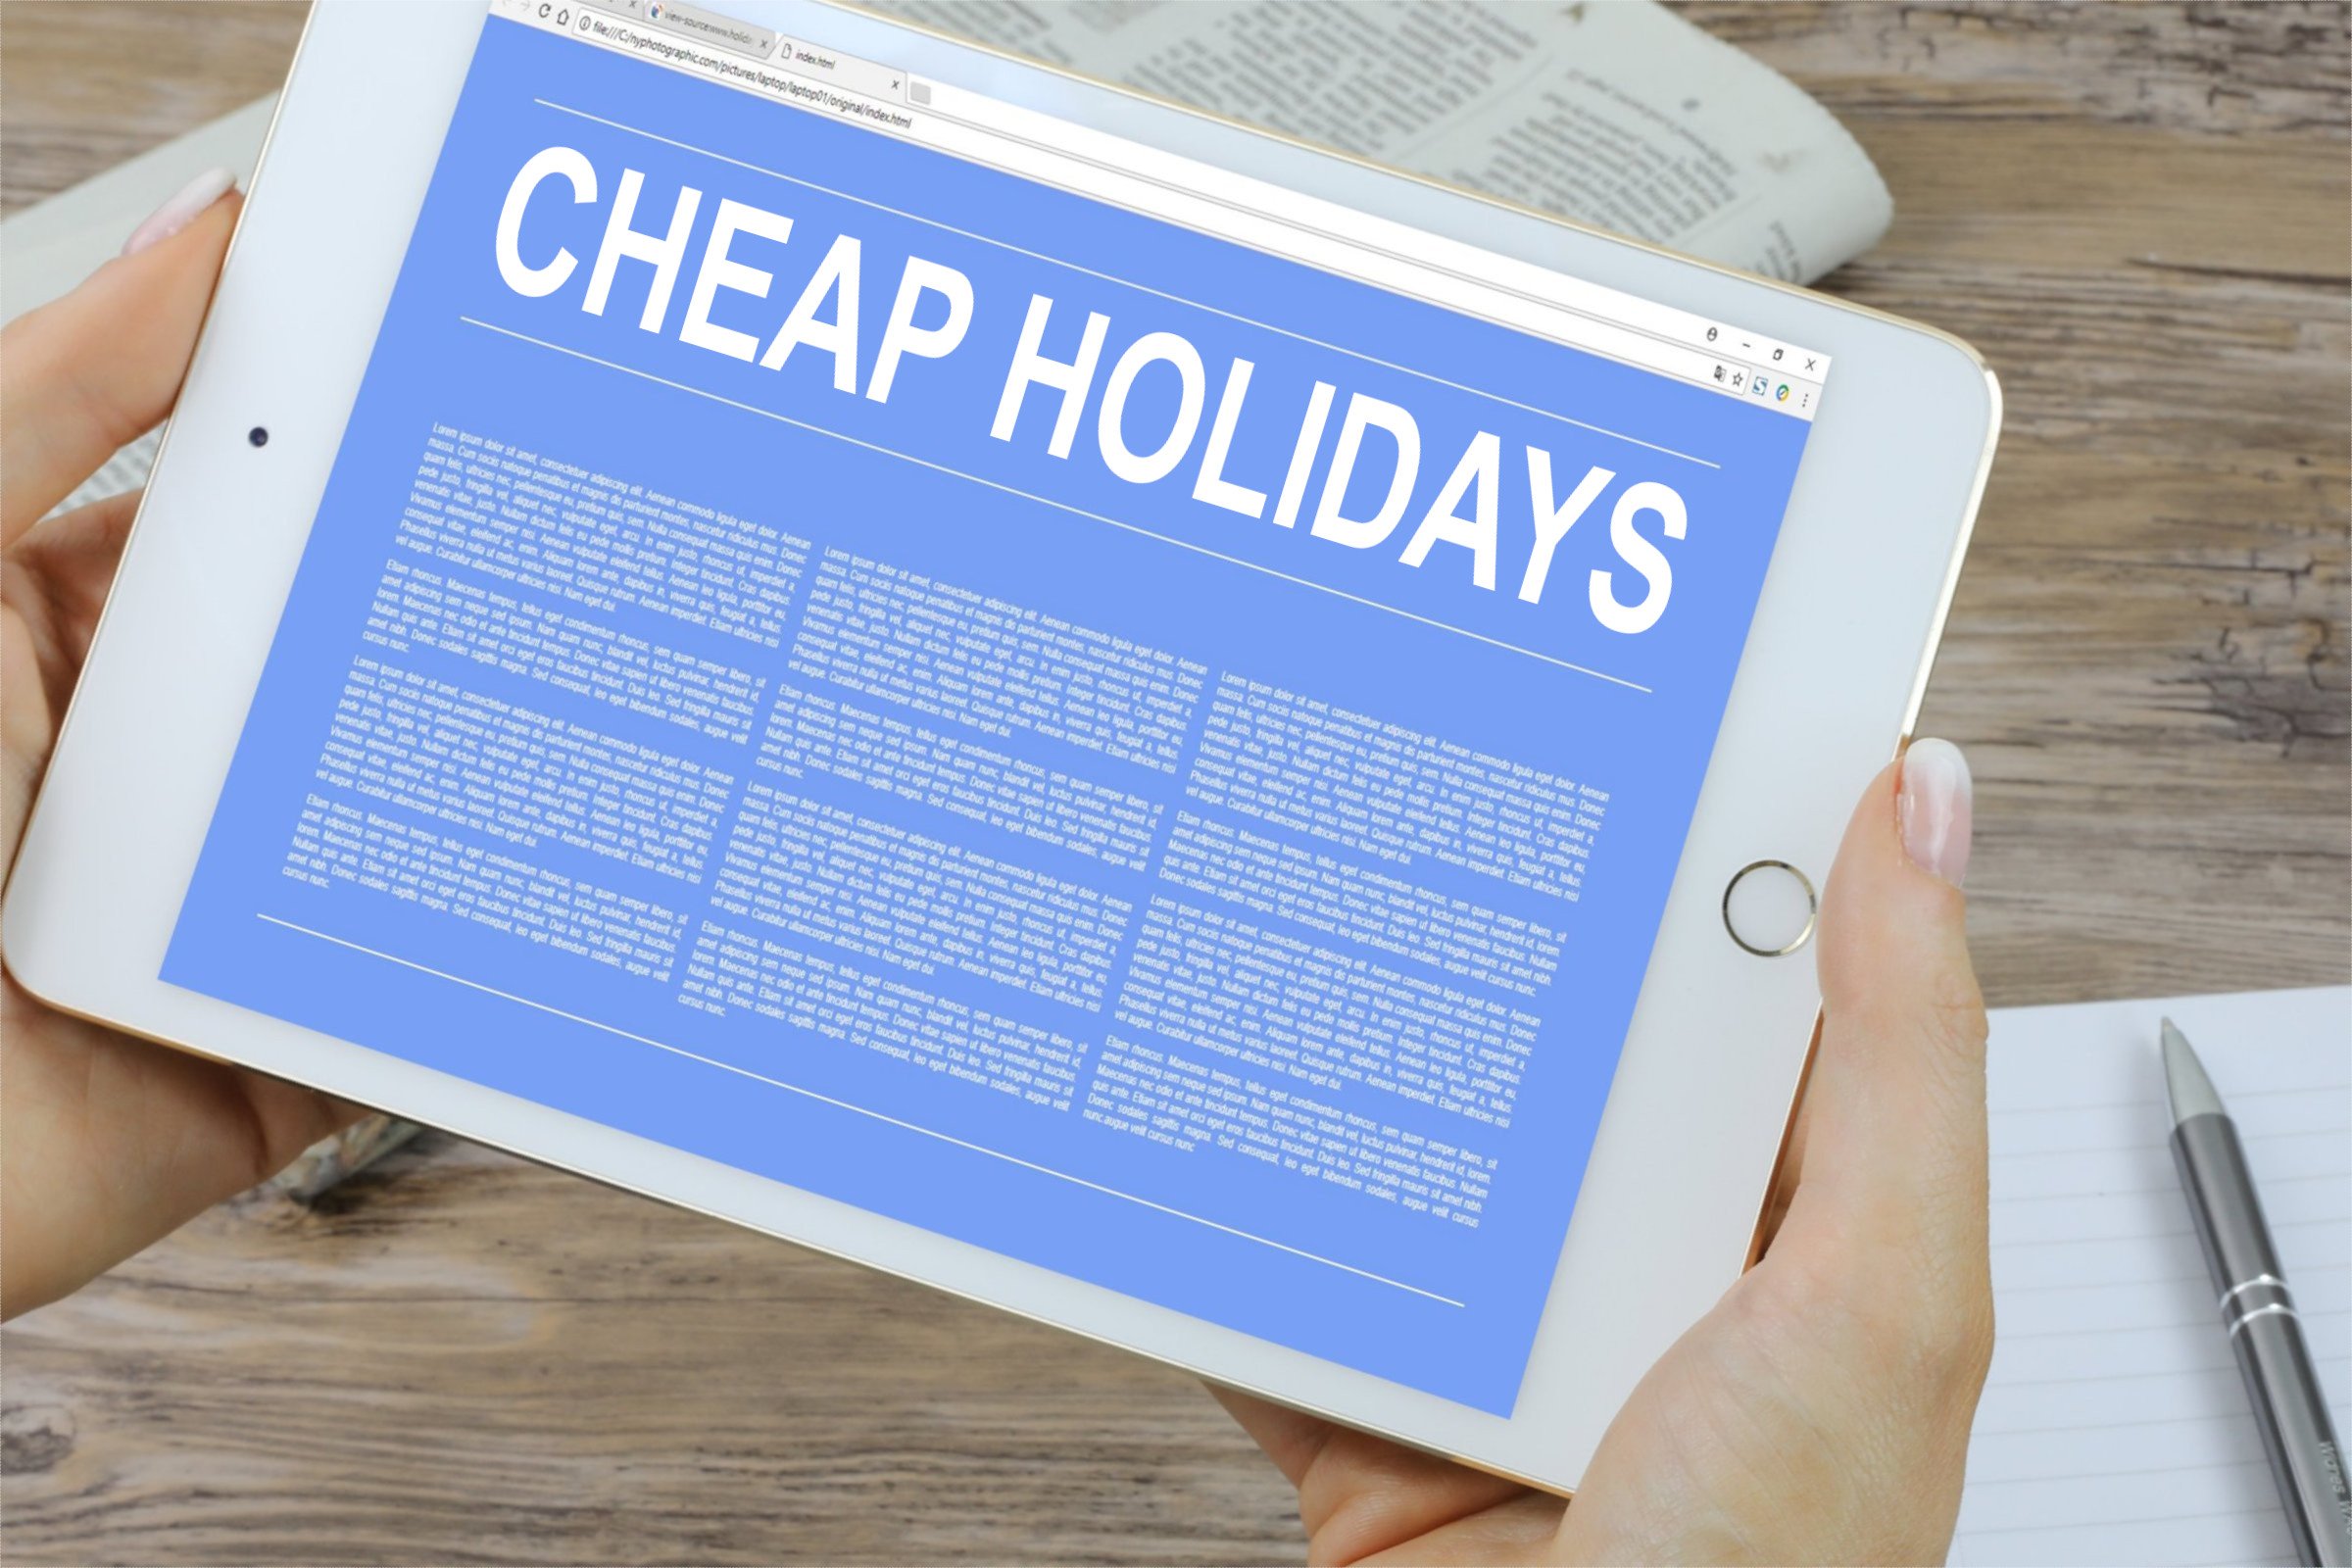 cheap holidays